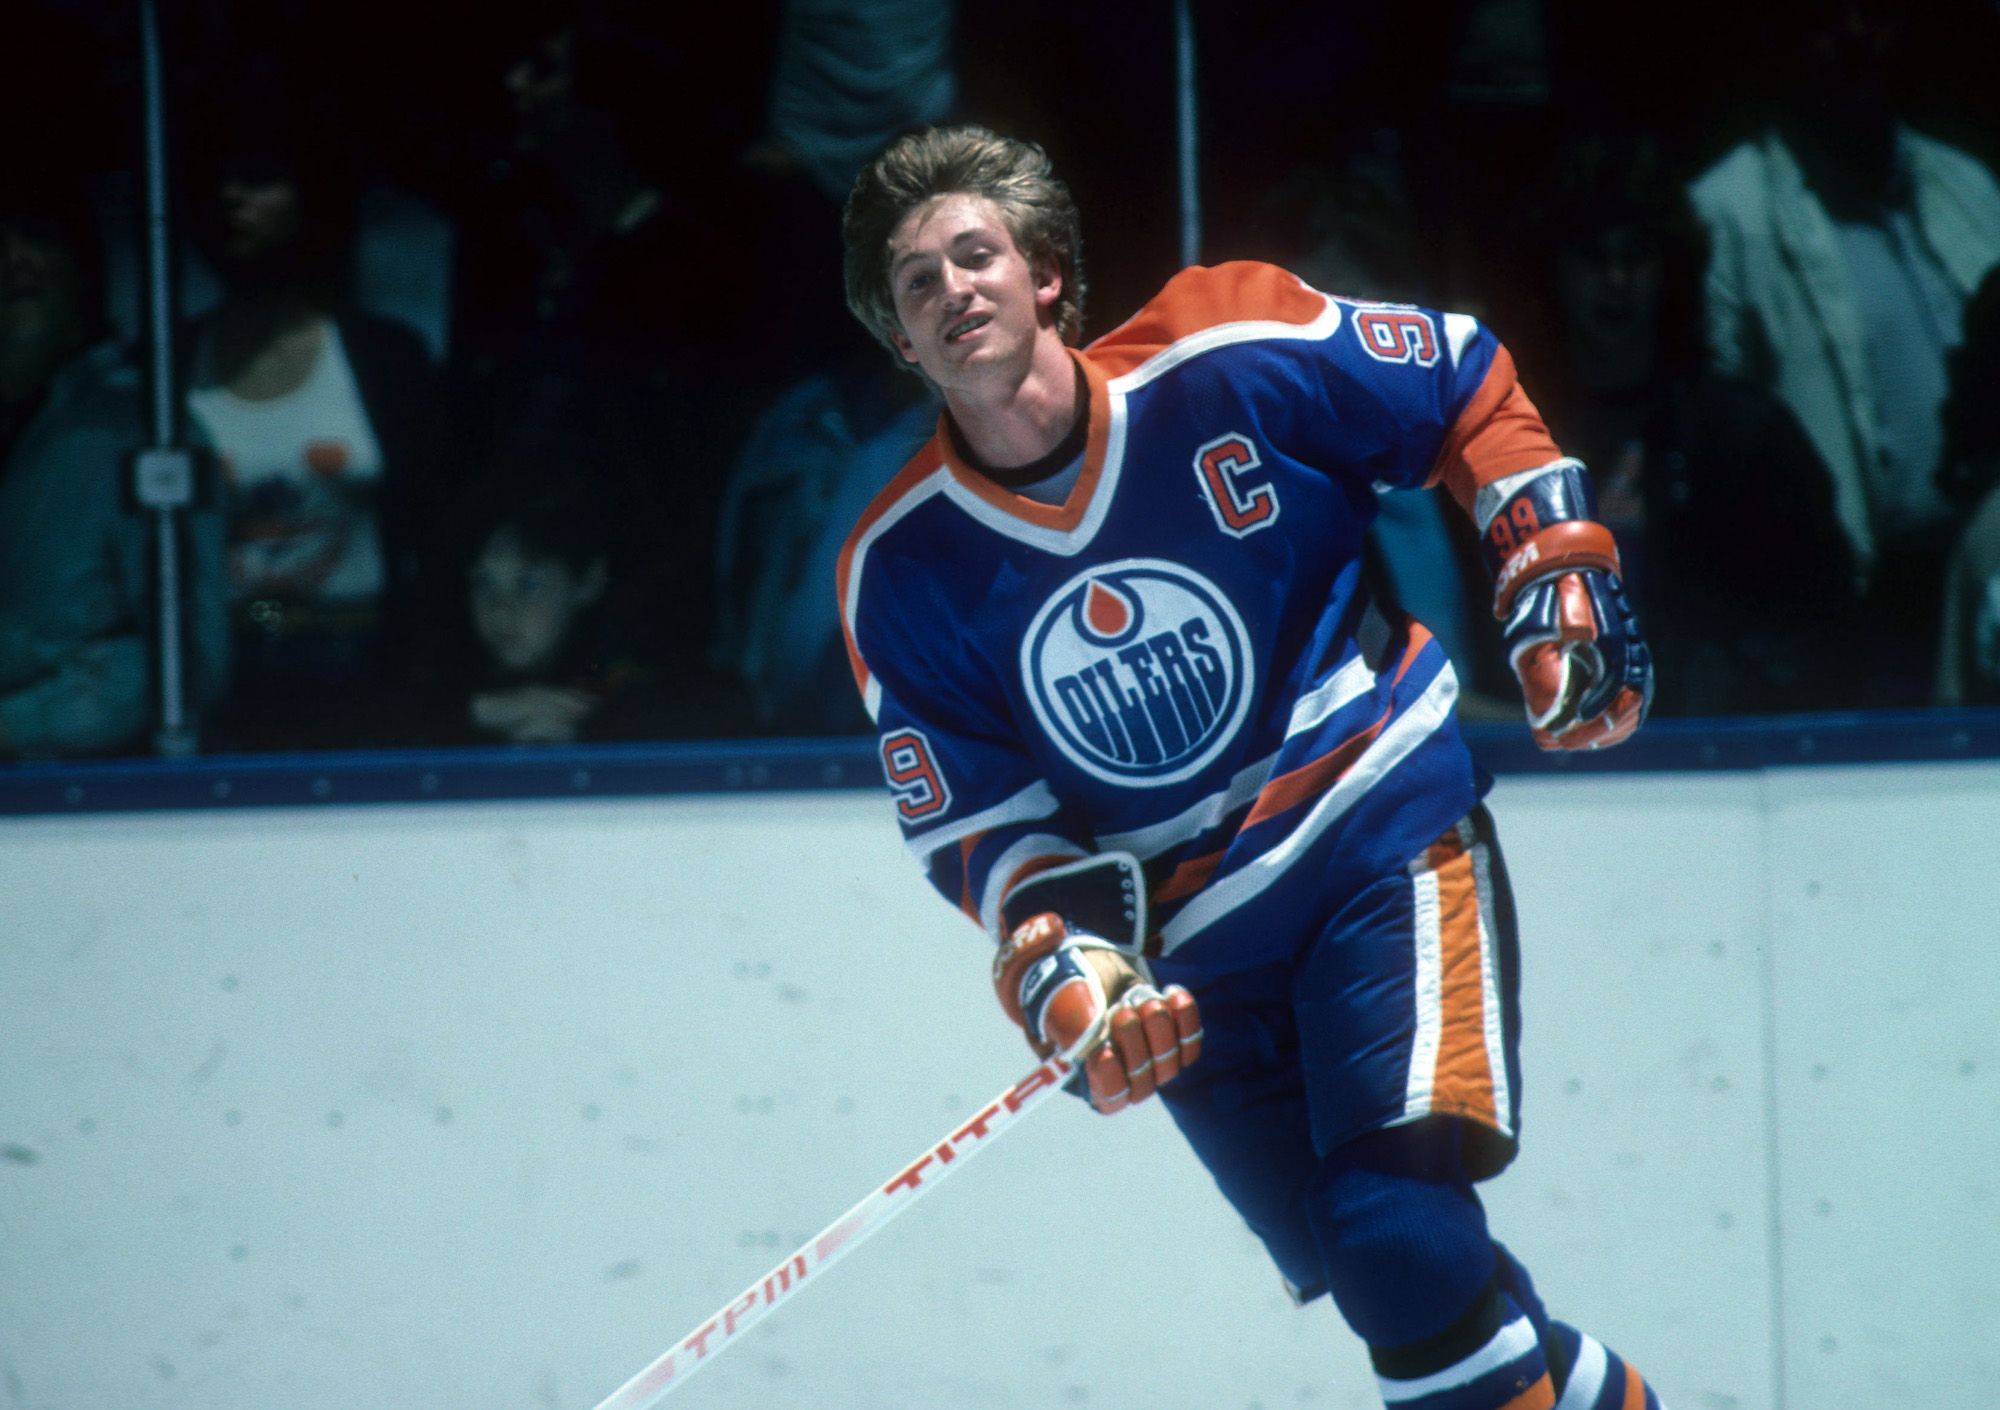 Wayne Gretzky to drop the puck at Game 3 - NBC Sports